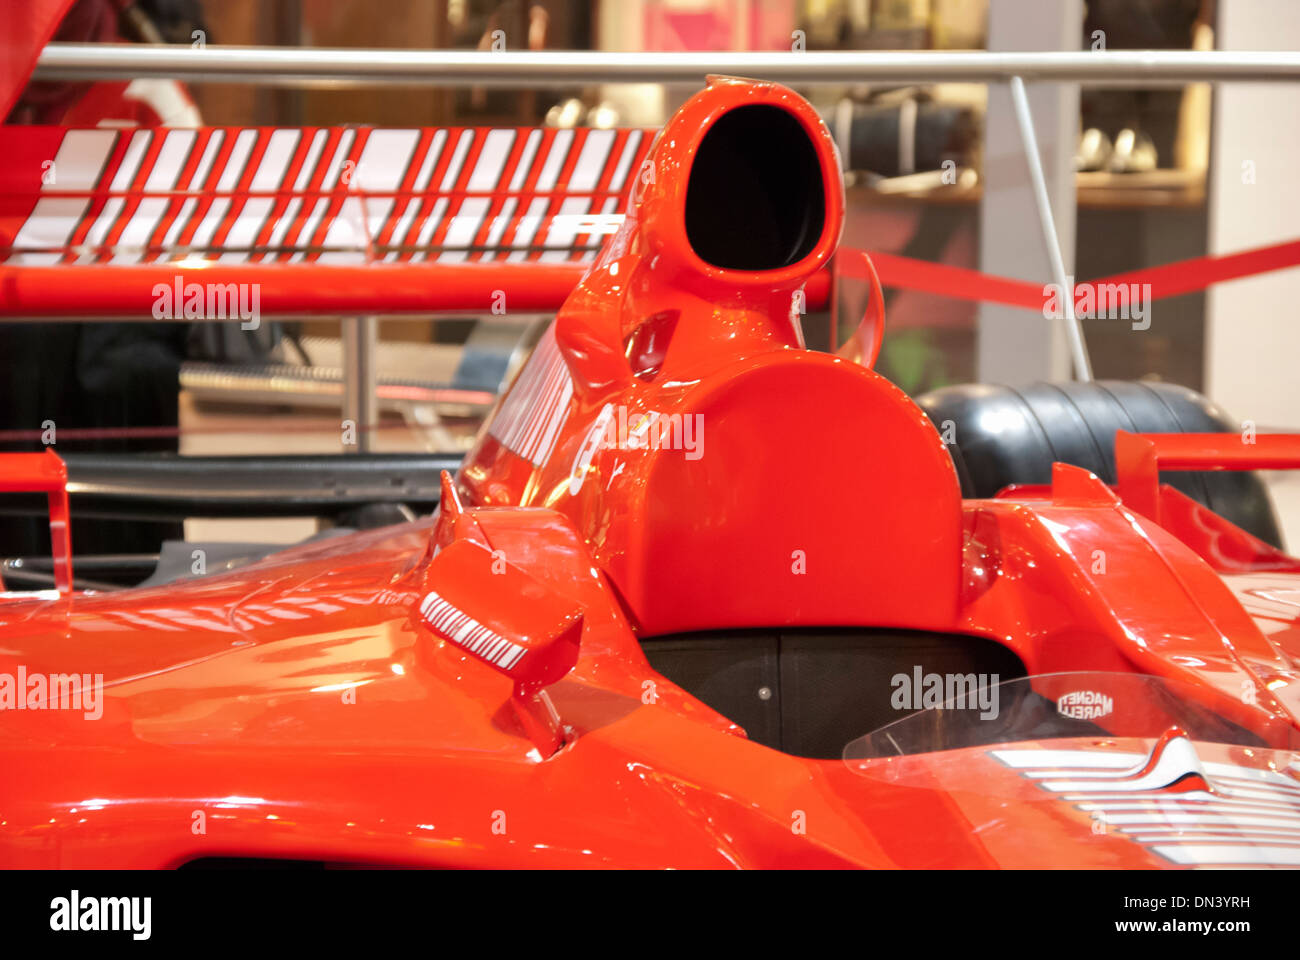 Ferrari F1 Images – Browse 3,431 Stock Photos, Vectors, and Video